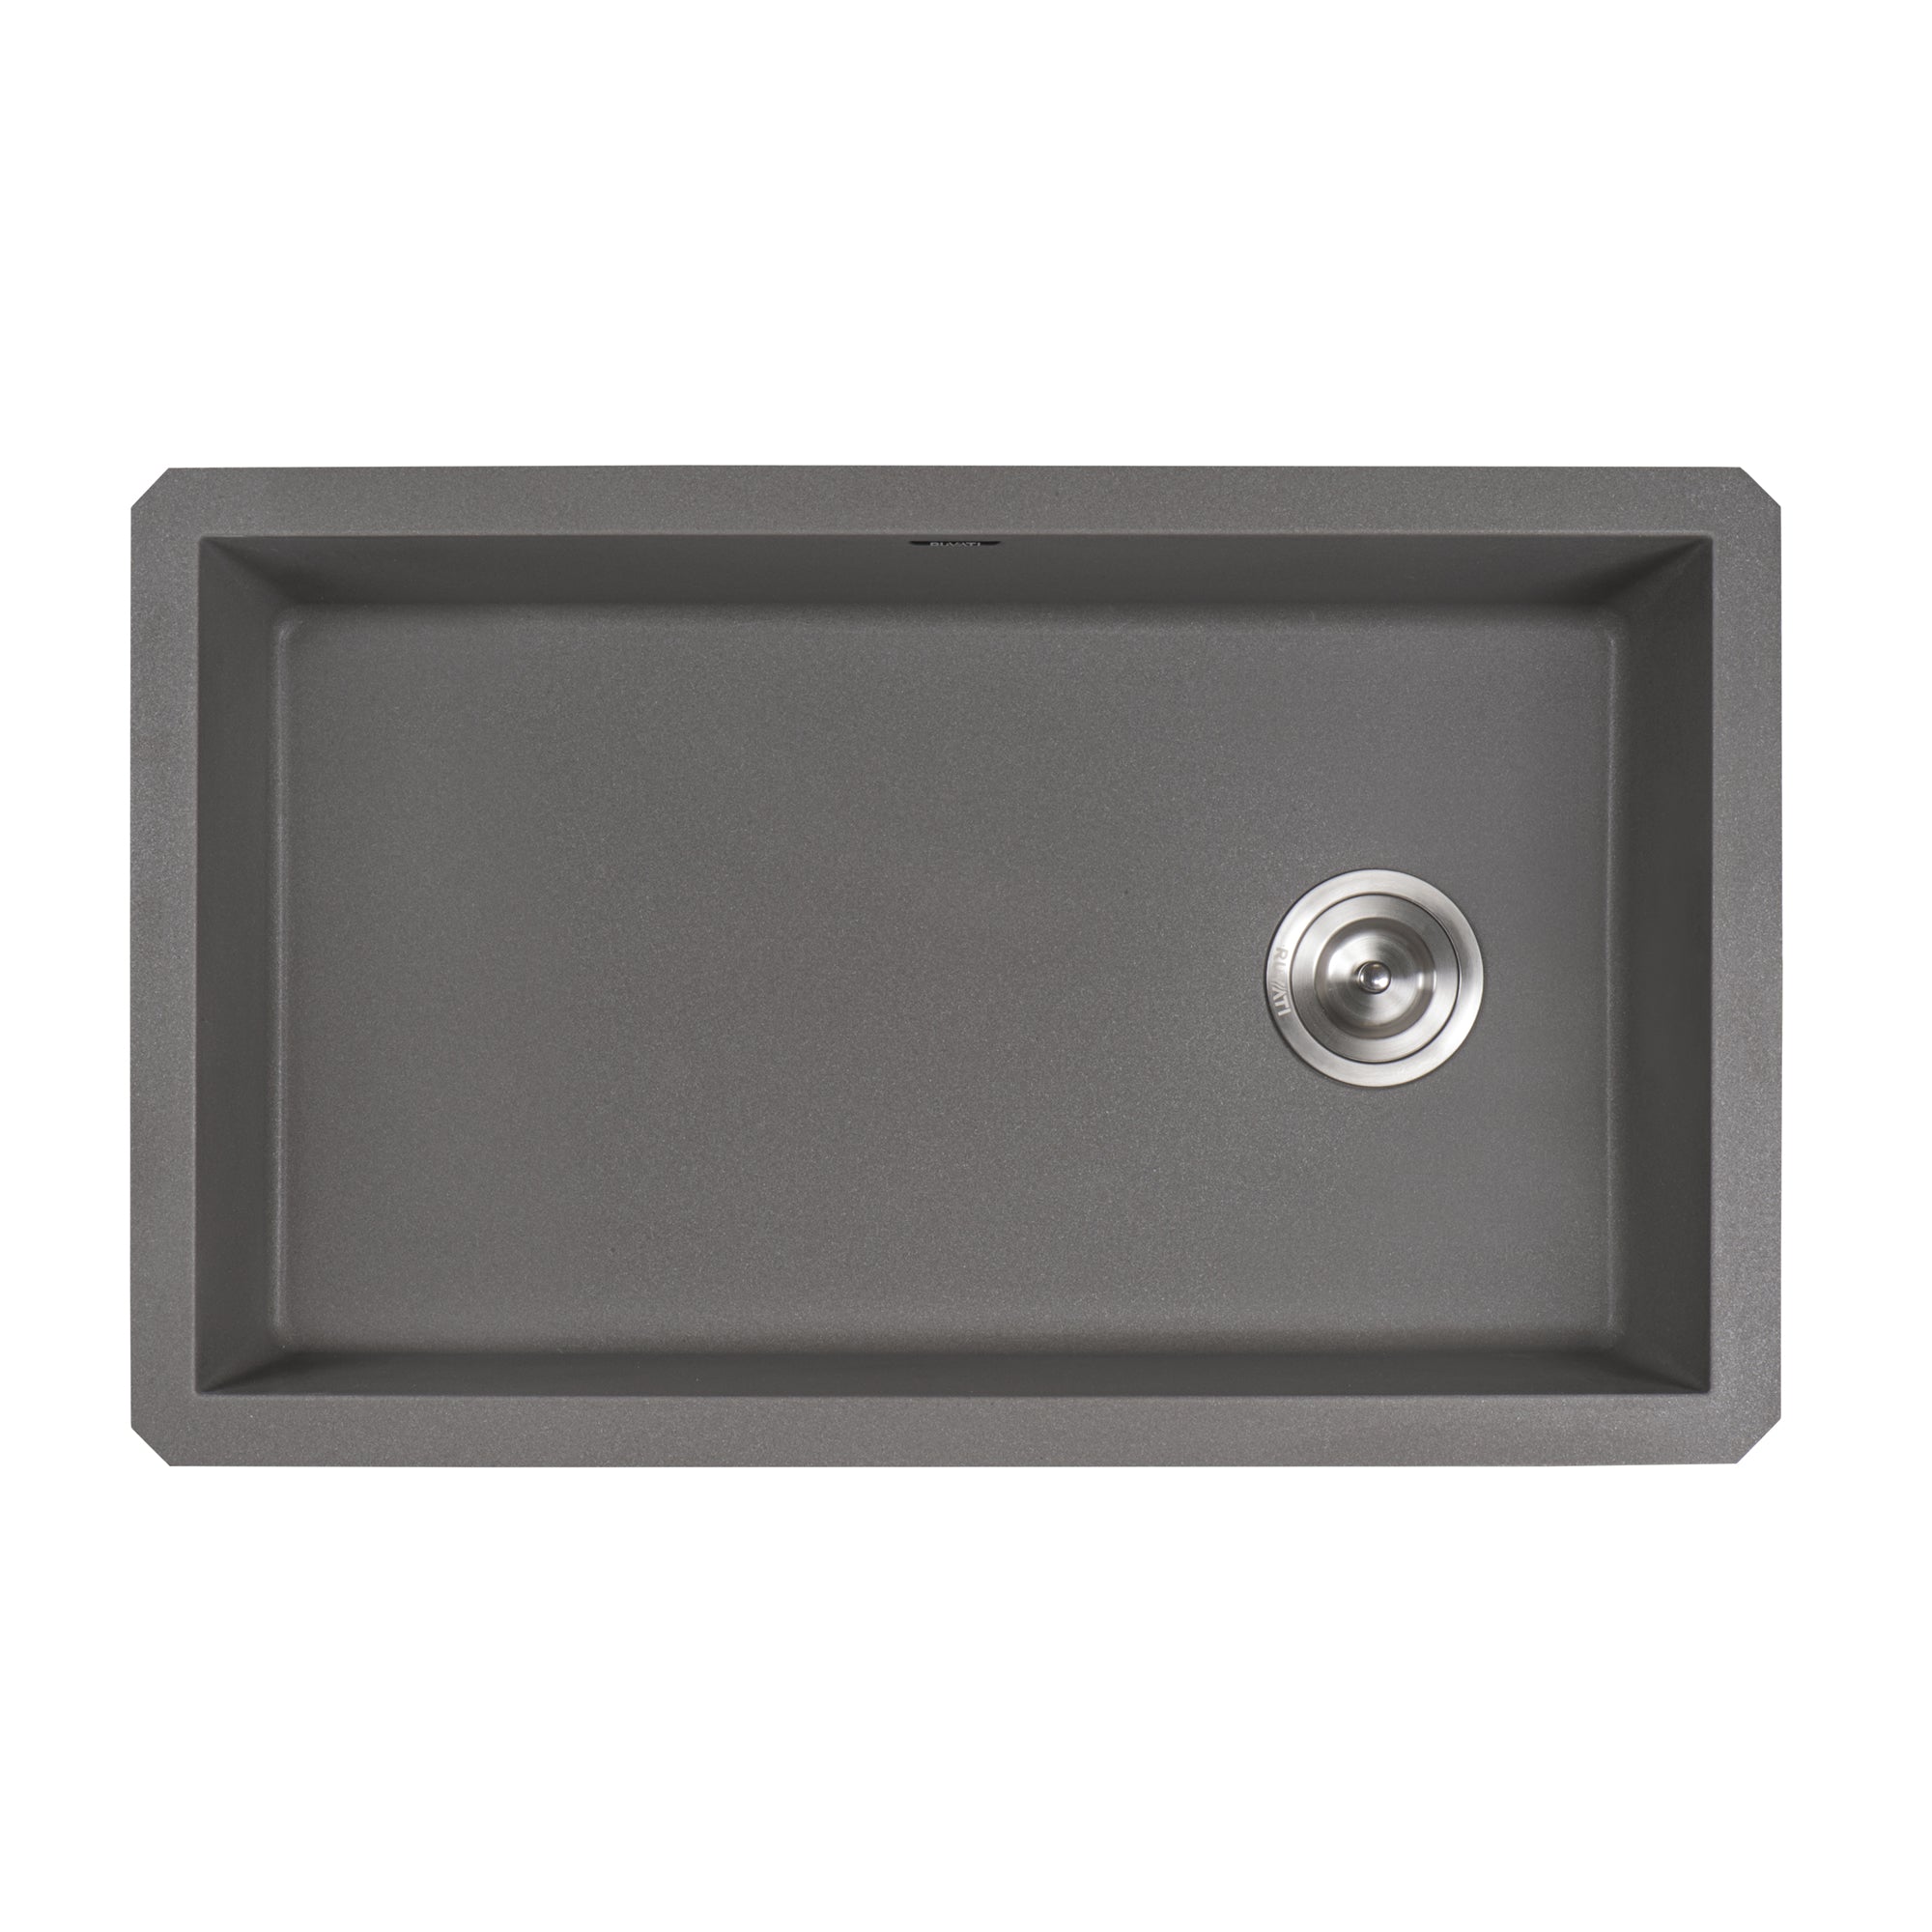 32 x 19 inch epiGranite Undermount Granite Composite Single Bowl Kitchen Sink – Urban Gray